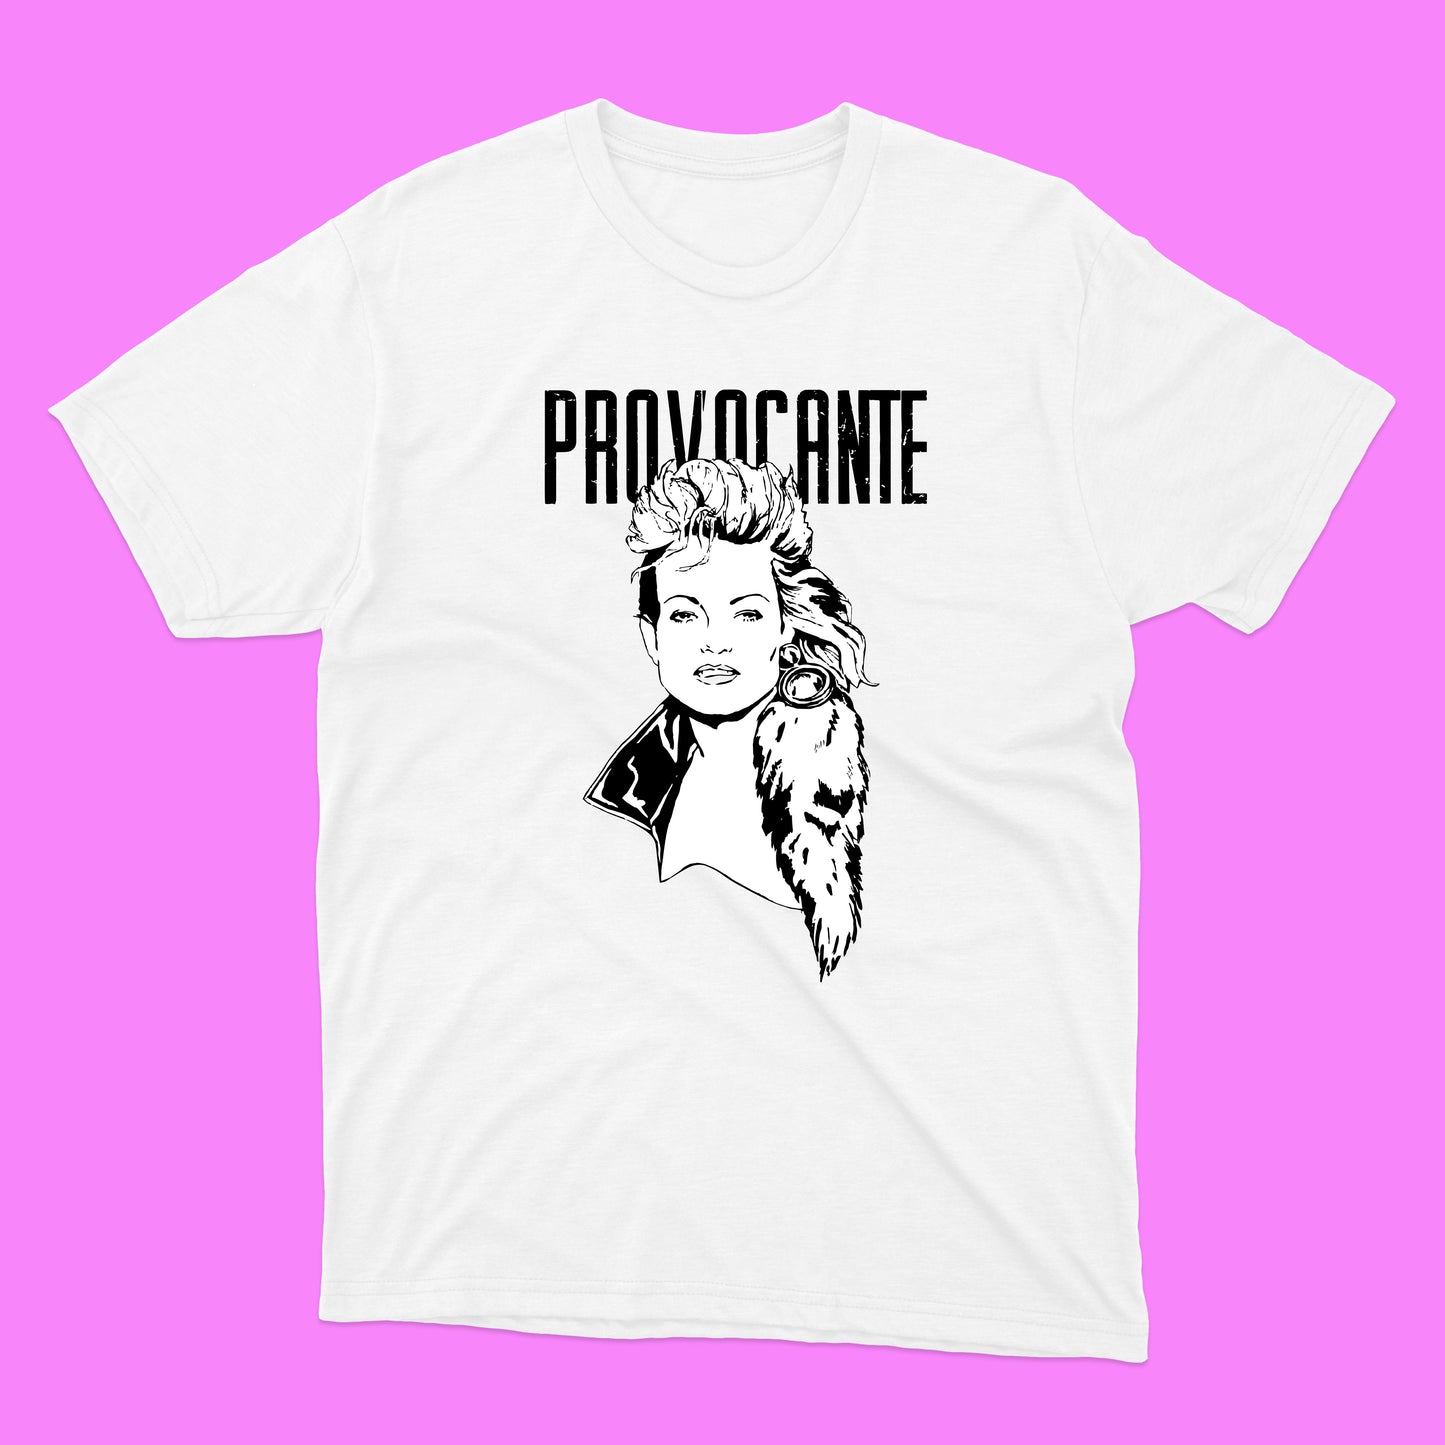 PROVOCANTE (t-shirt unisexe) - tamelo boutique